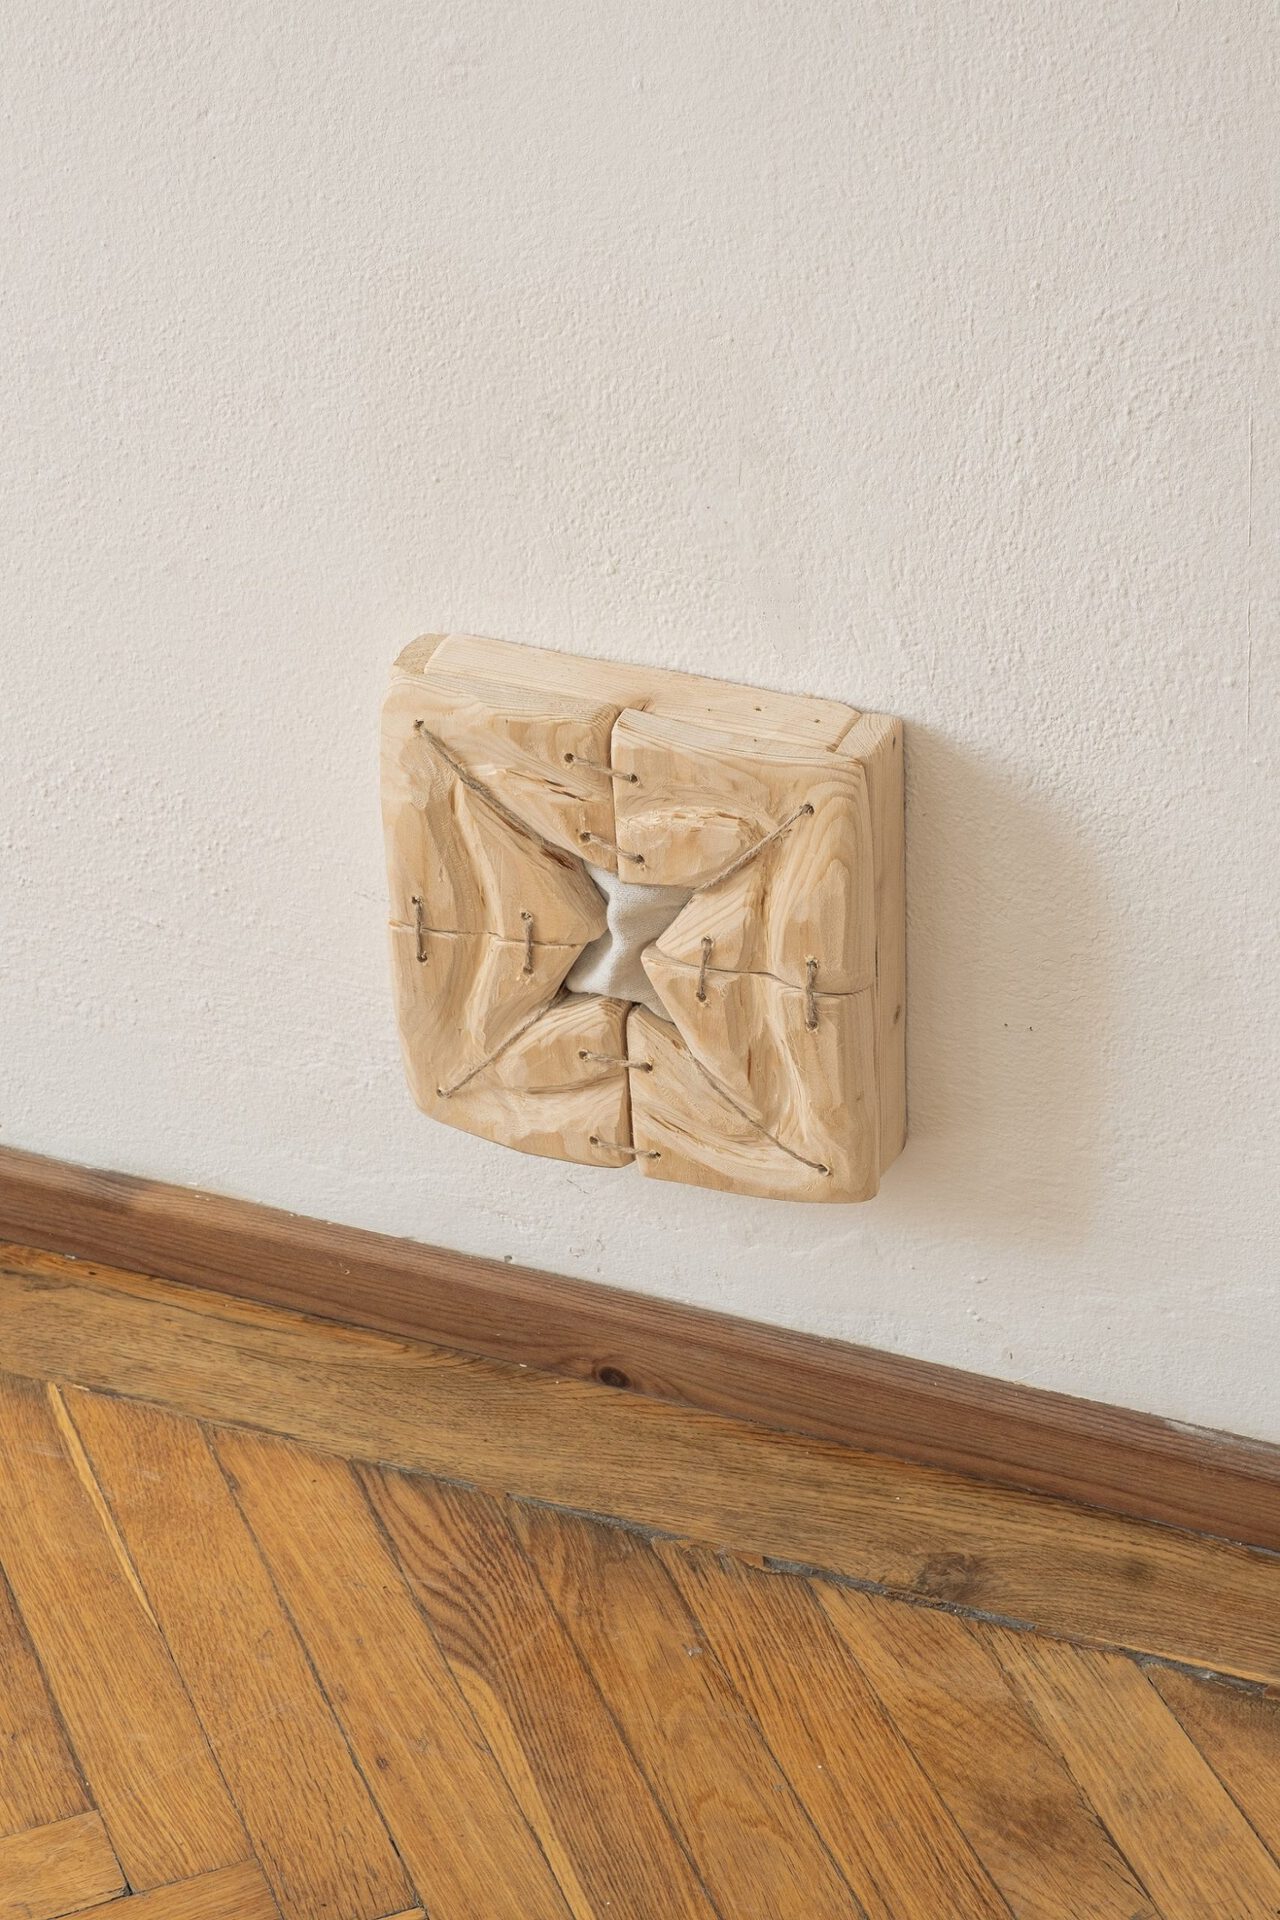 KANREC SAKUL, SUNSHINE,wood object, 2020